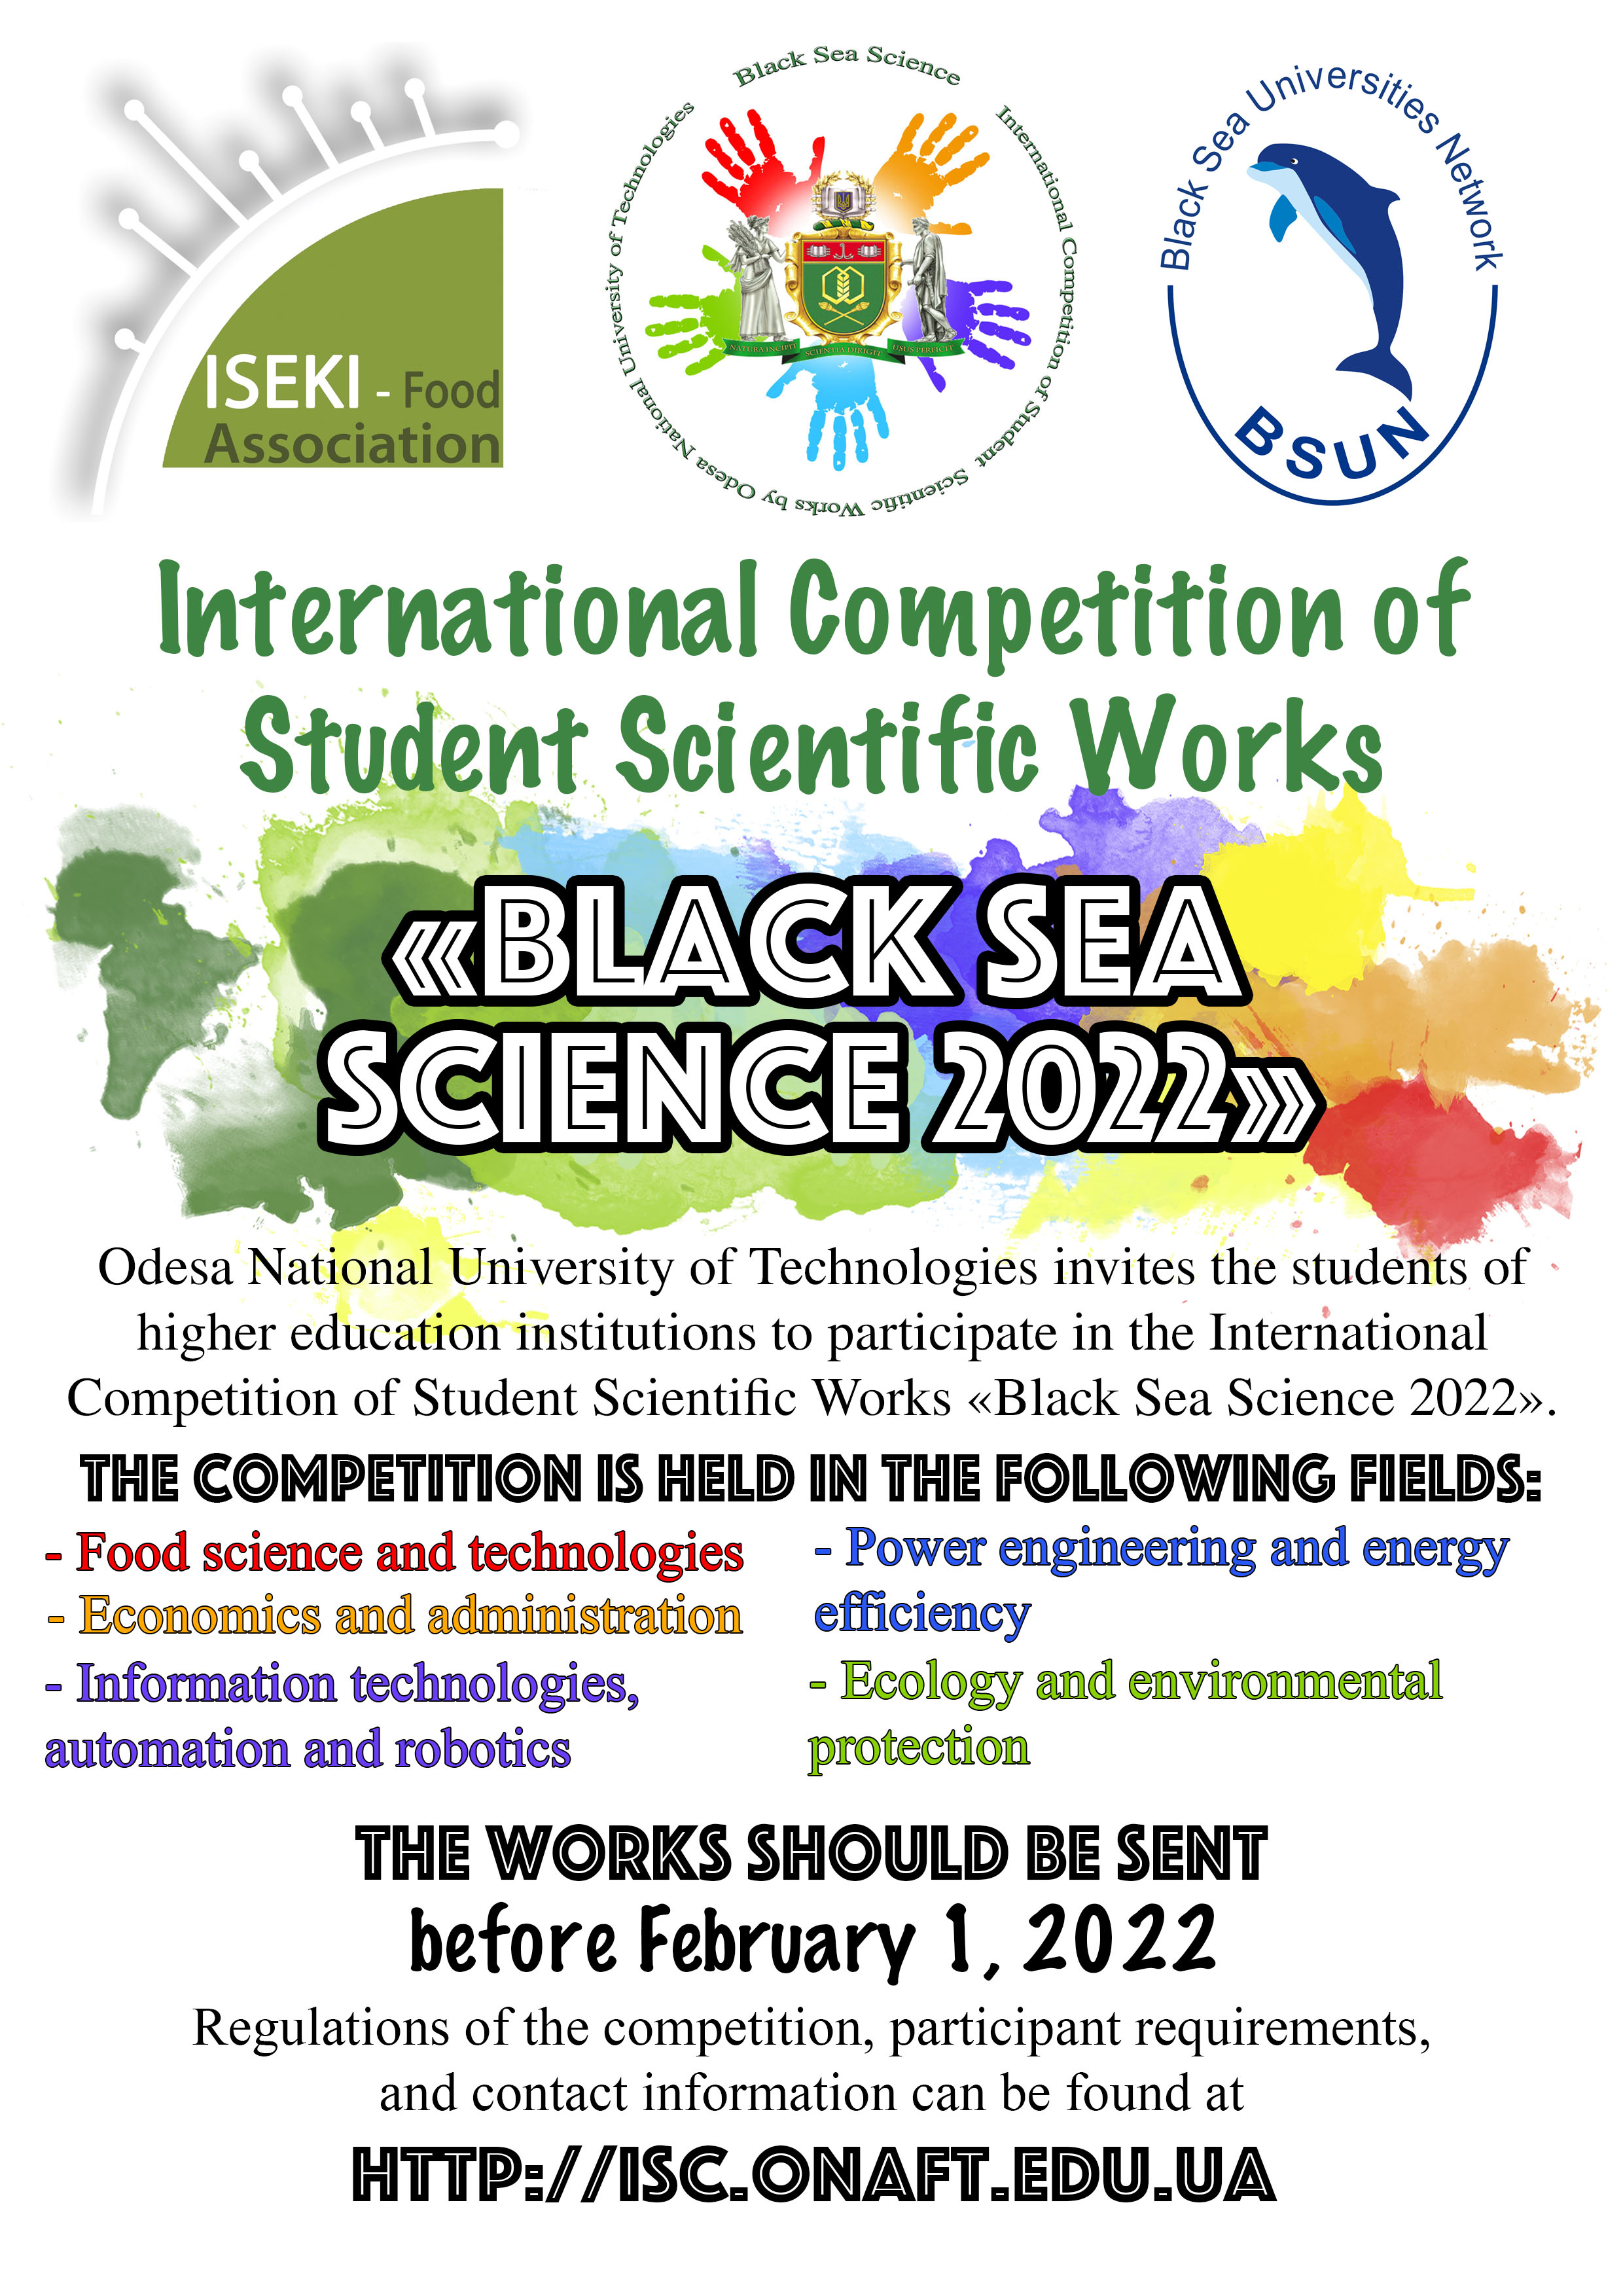 Black Sea Science